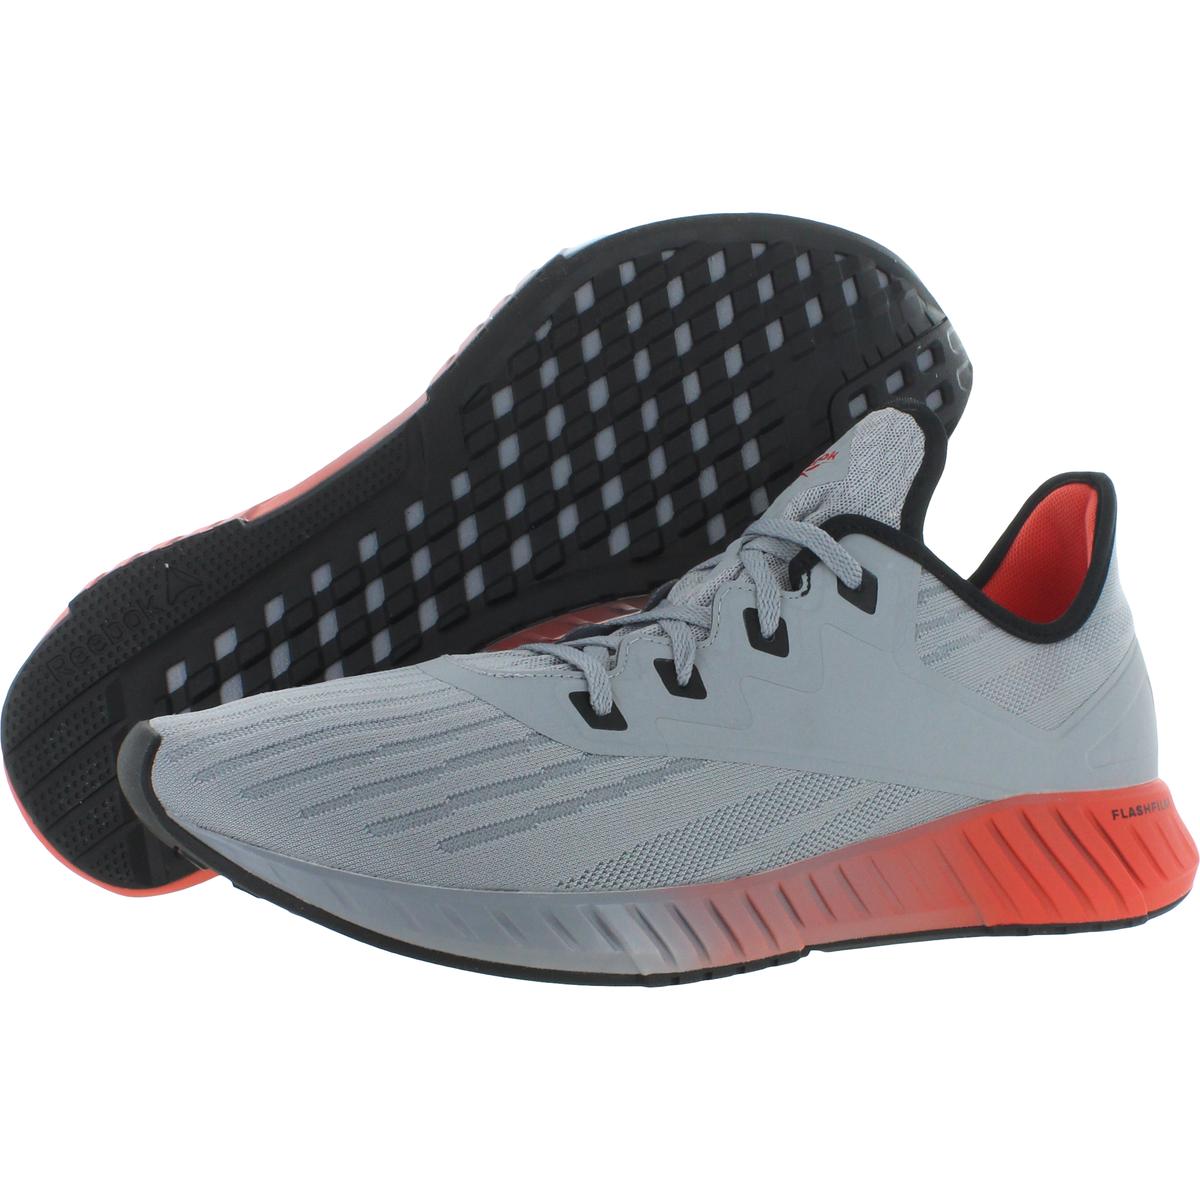 Reebok Mens Flash Film 2.0 Performance Sneakers Running Shoes Athletic ...